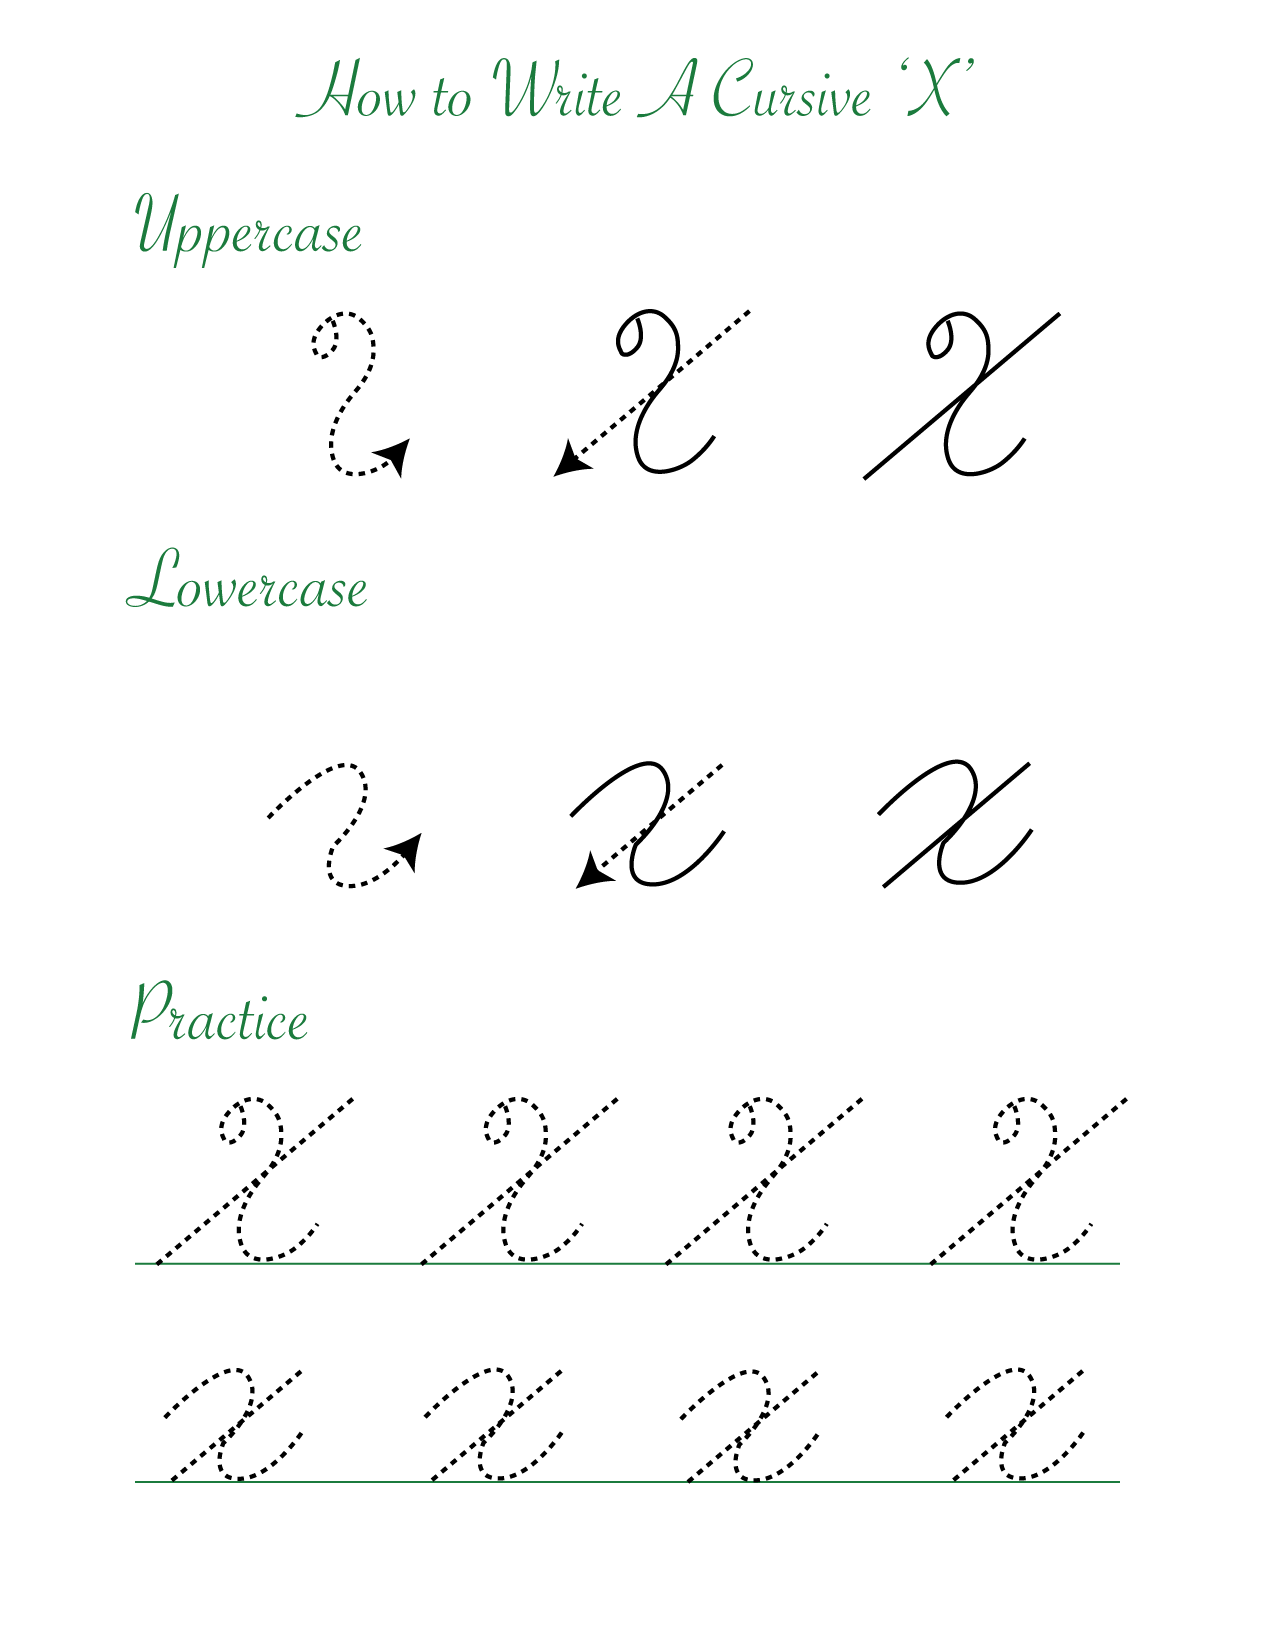 How to write a cursive X